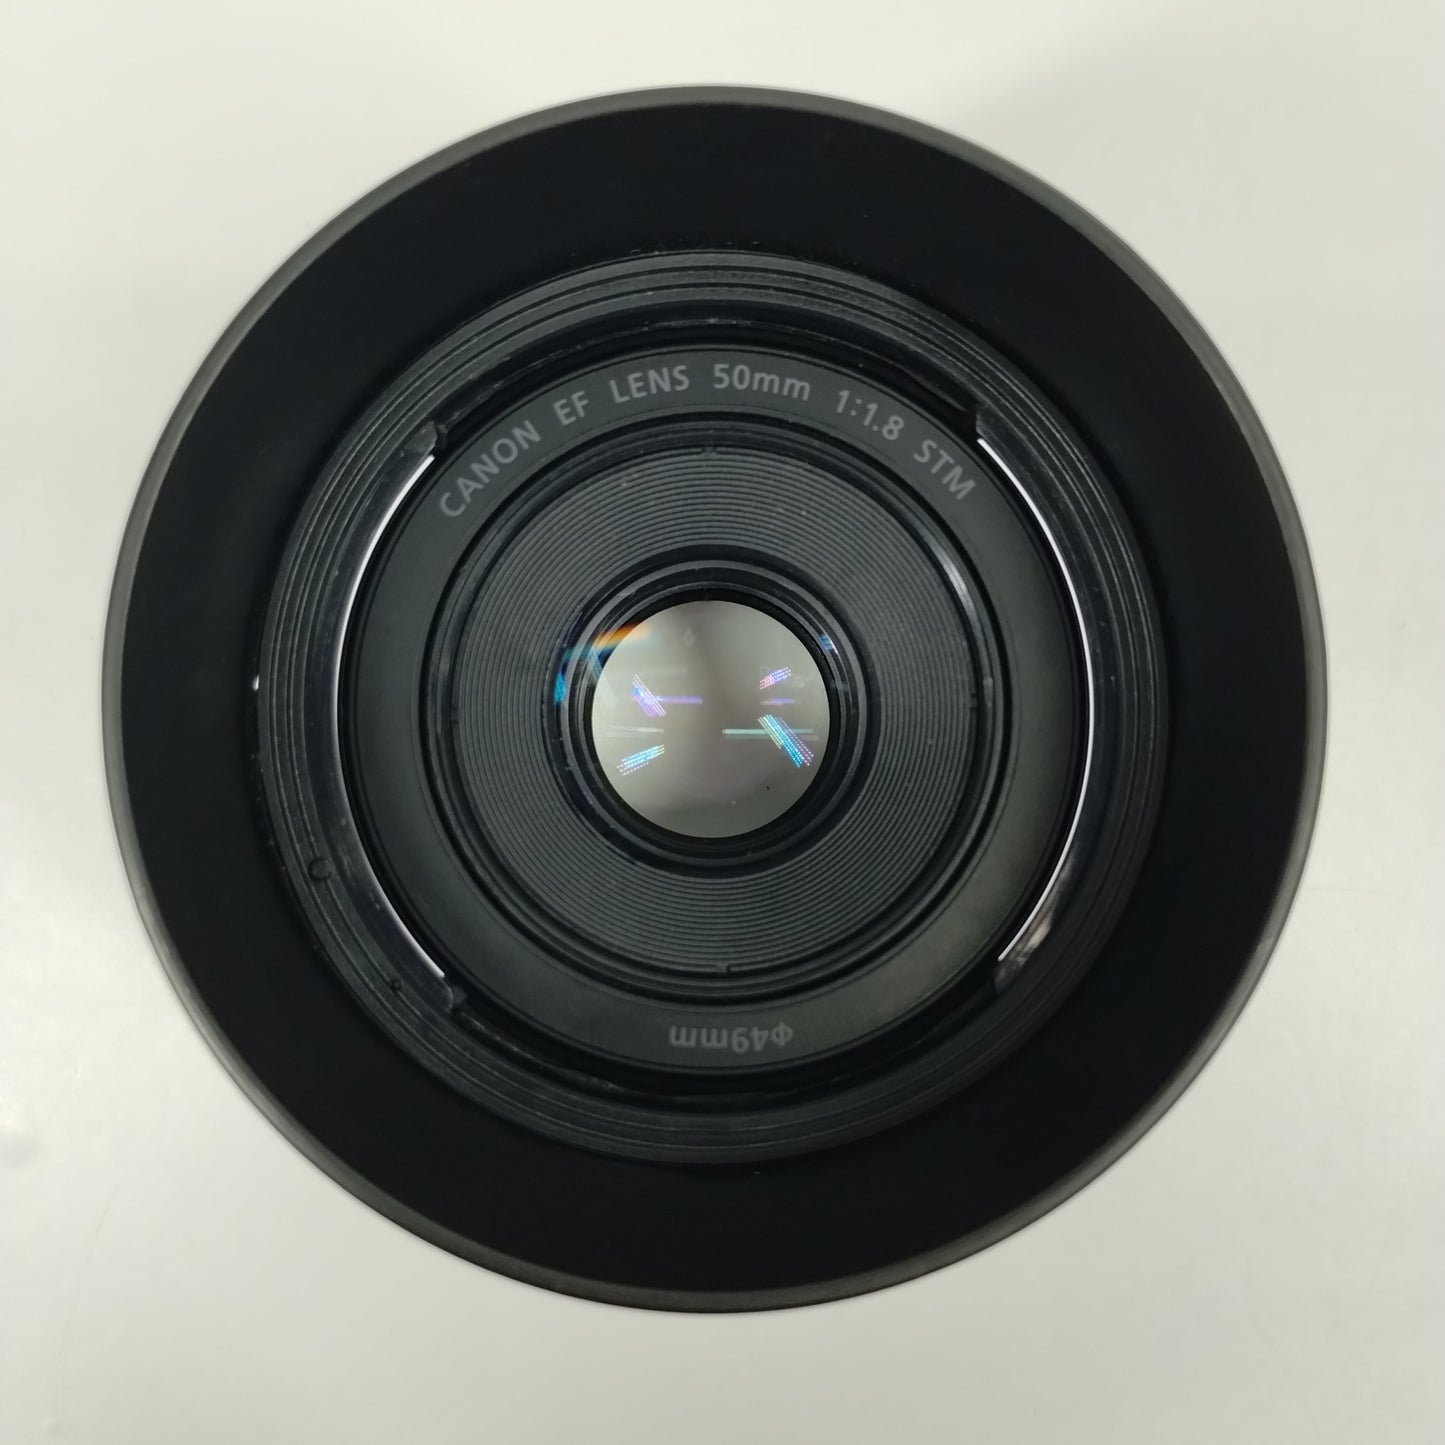 Canon EF Lens 50mm f/1.8